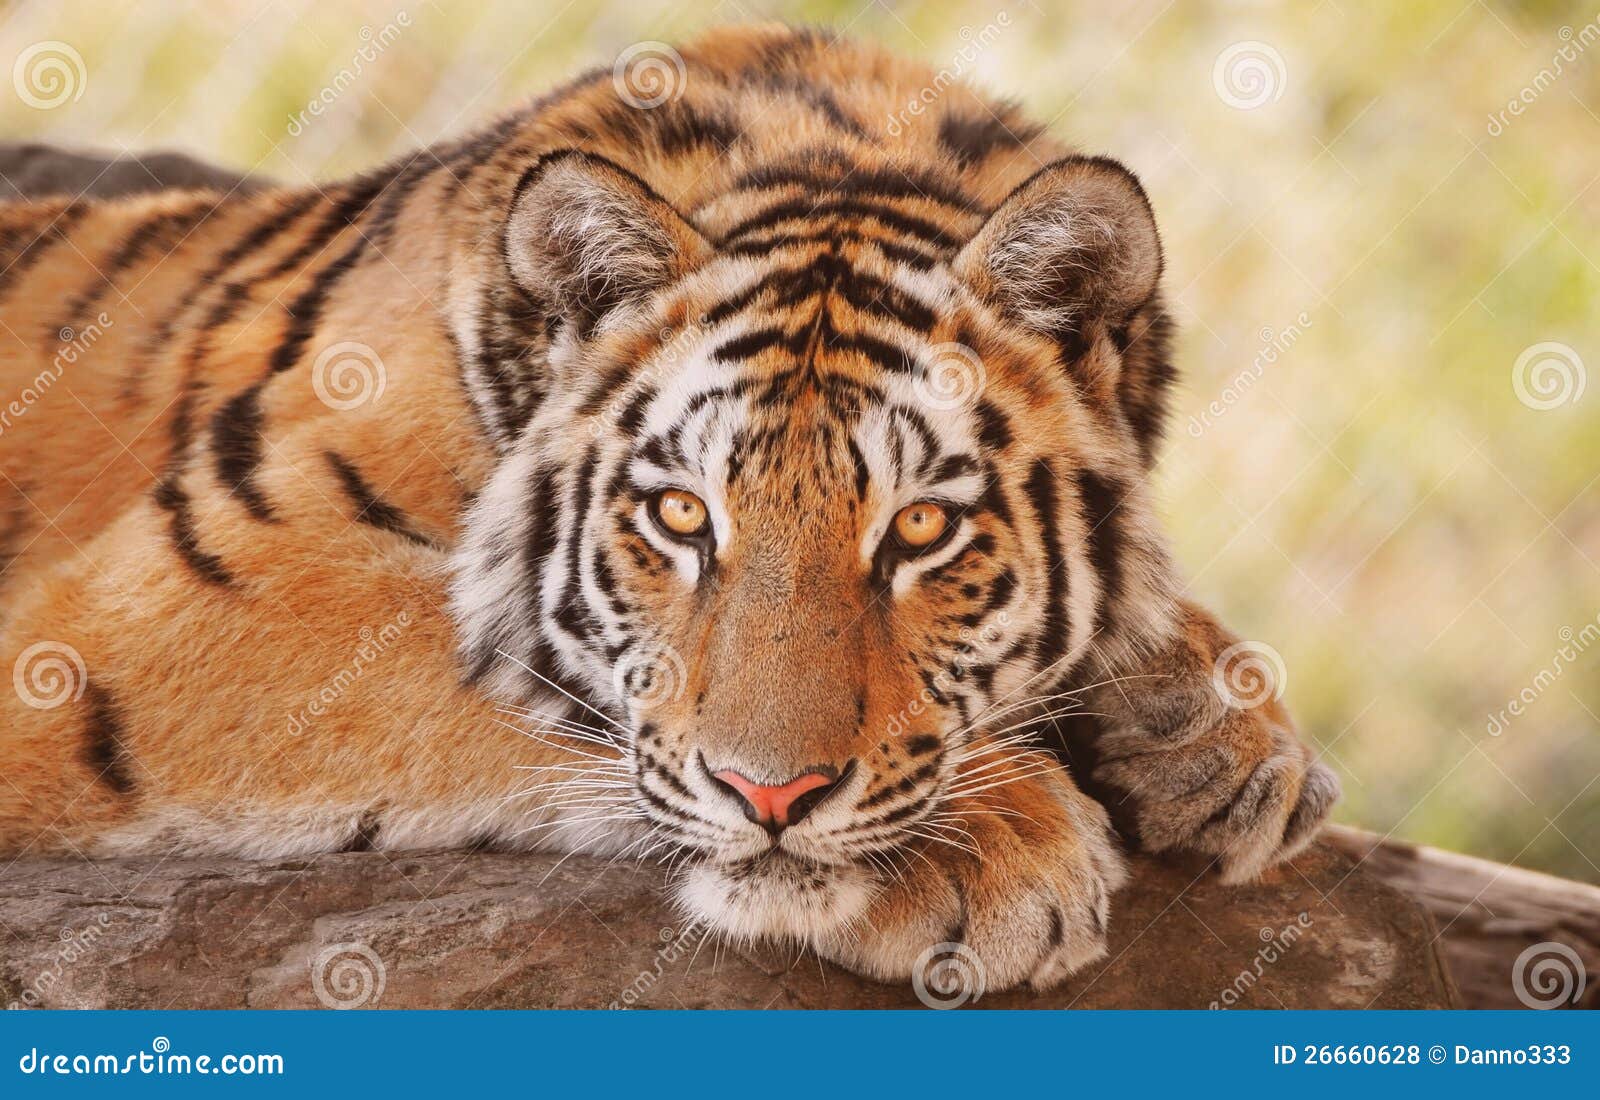 siberian or amur tiger